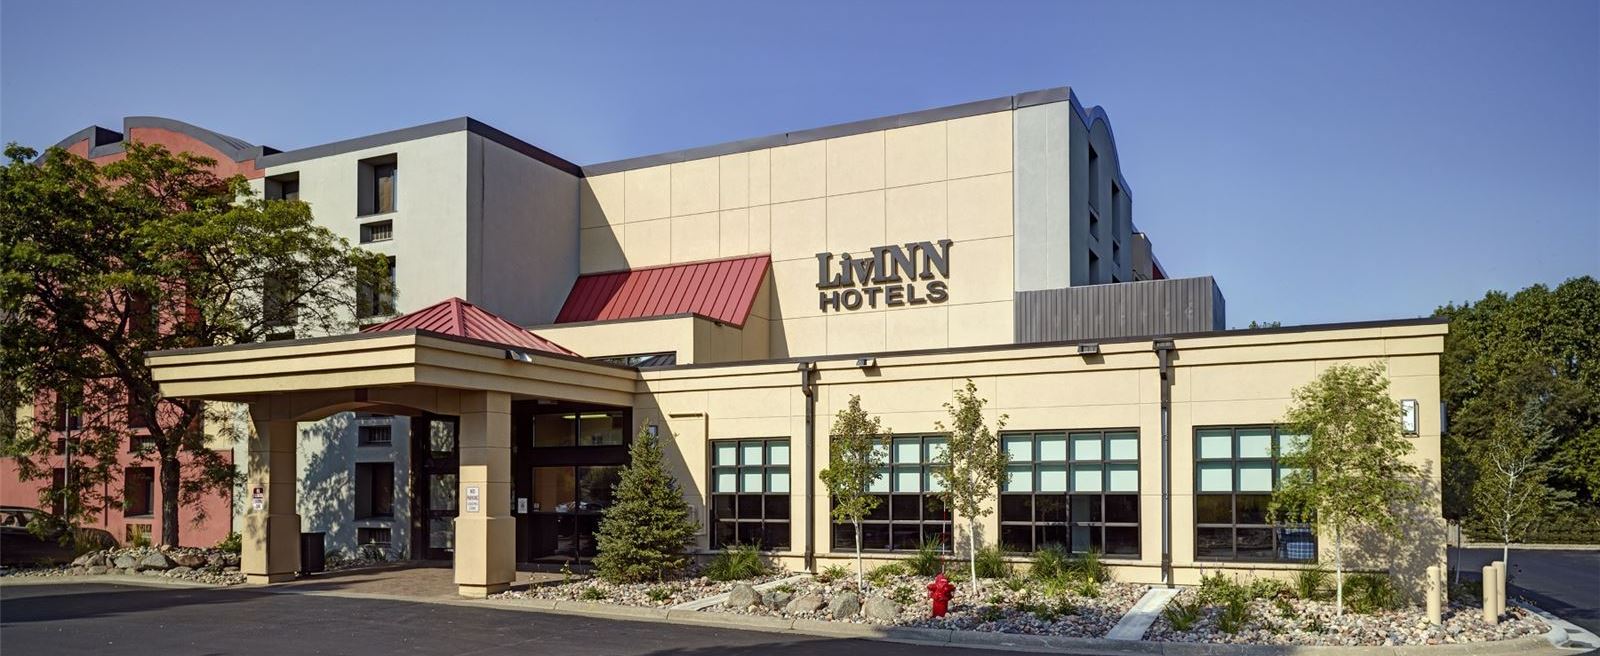 About LivINN Hotels, Minneapolis